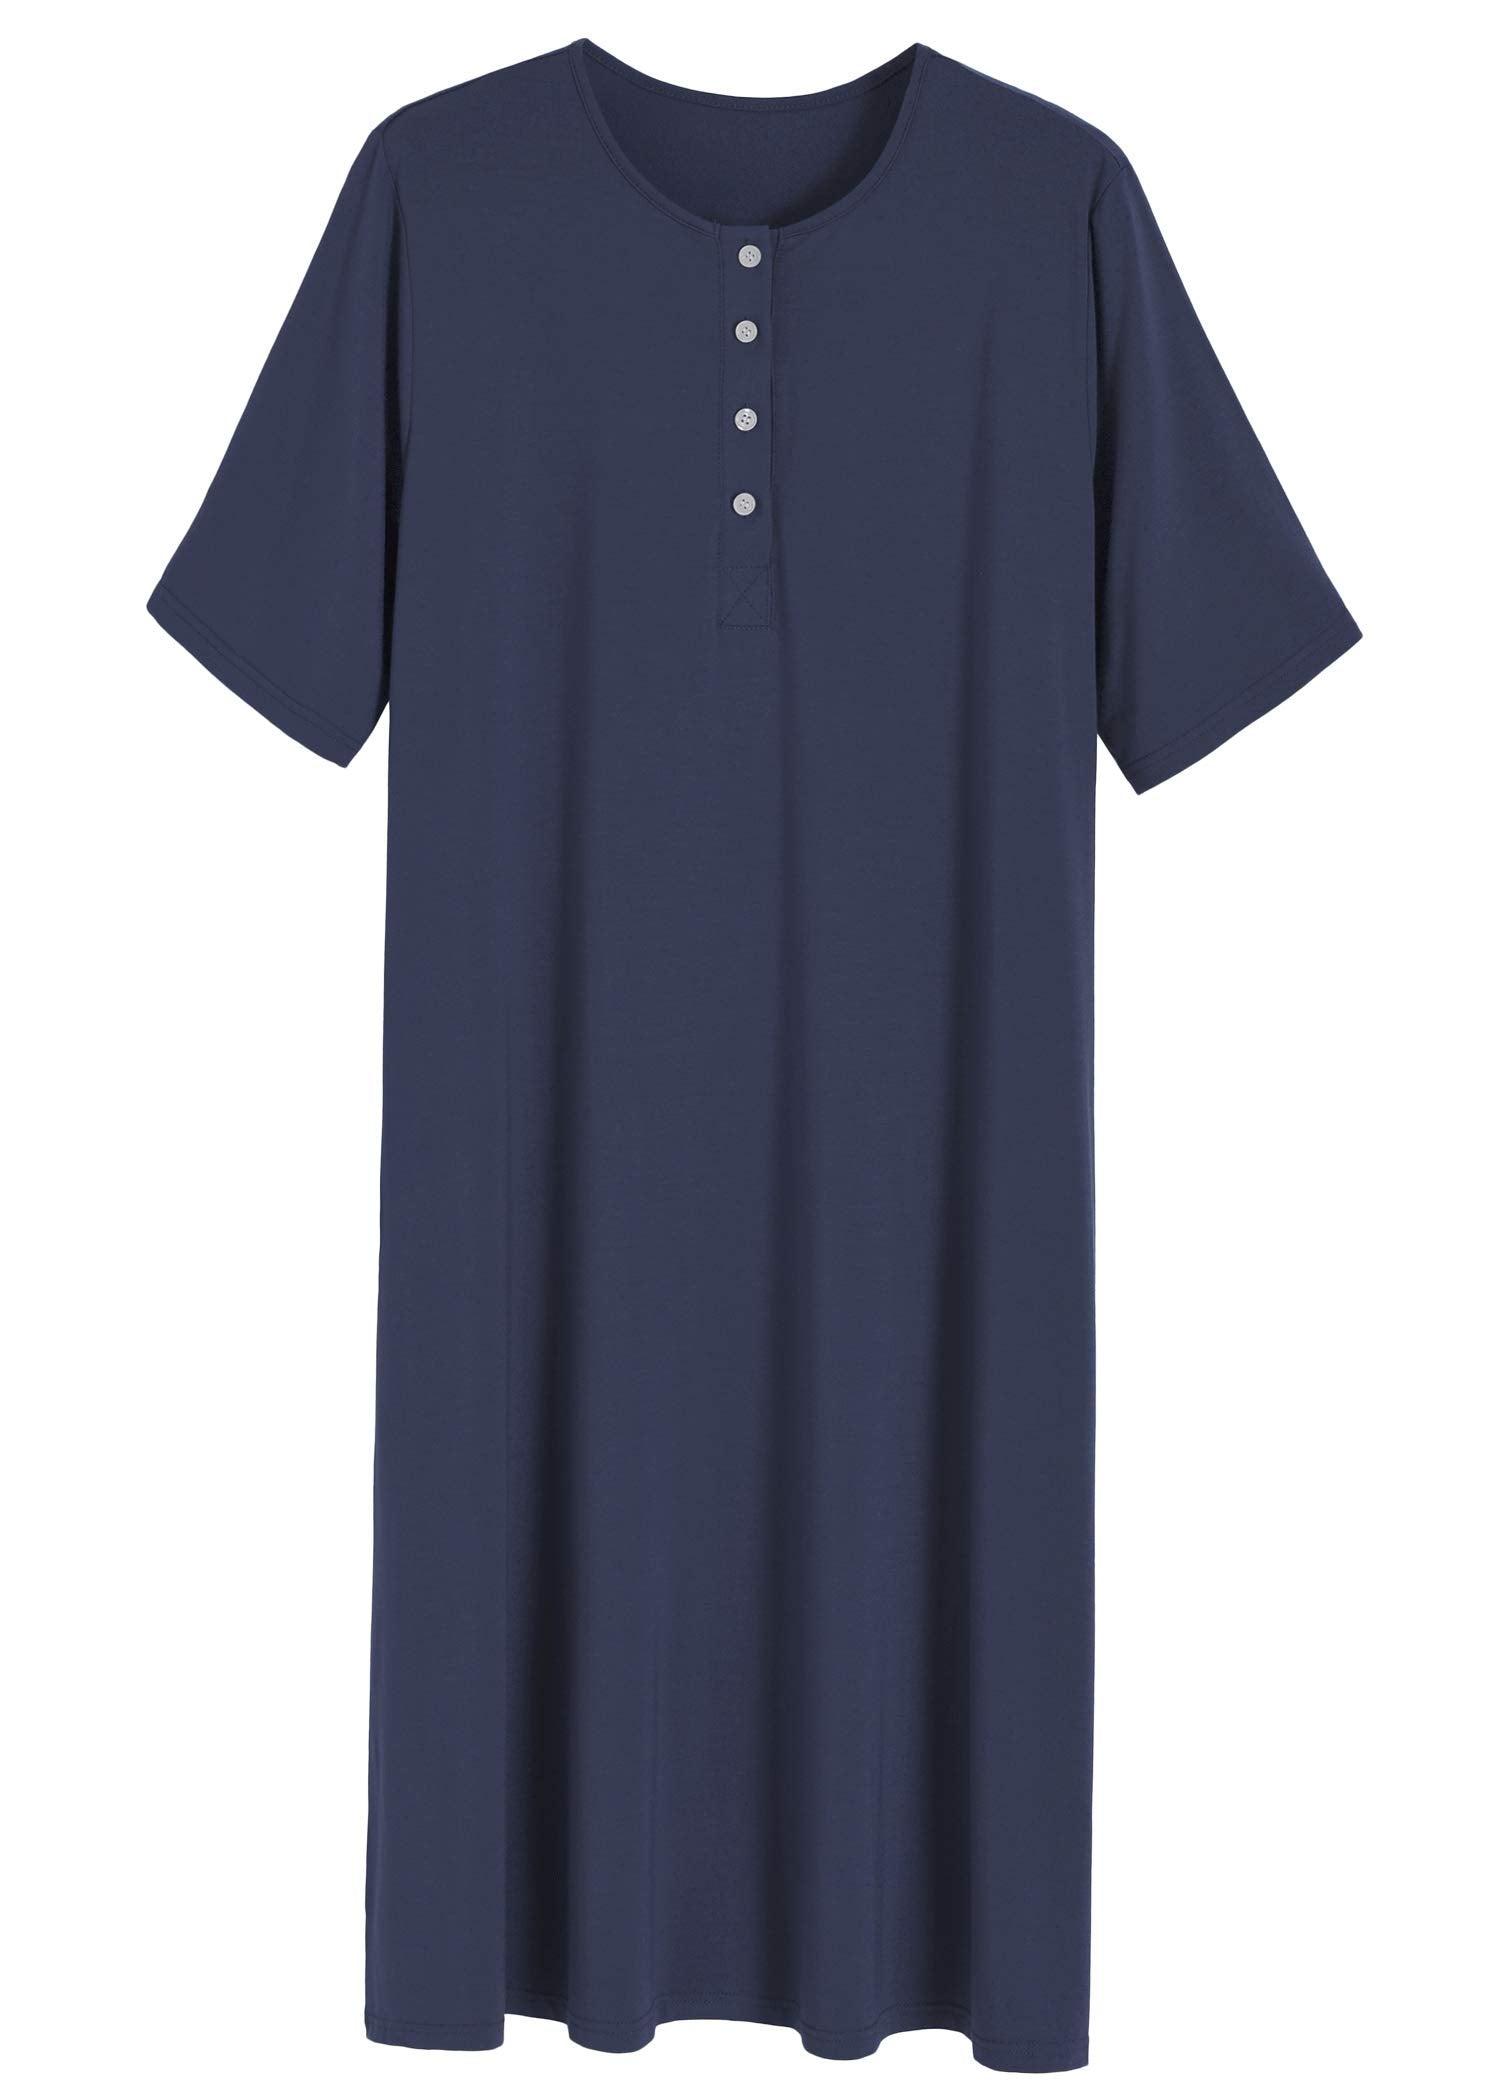 Women's Long Sleep Shirt Henley Nightshirt with Pockets - Latuza